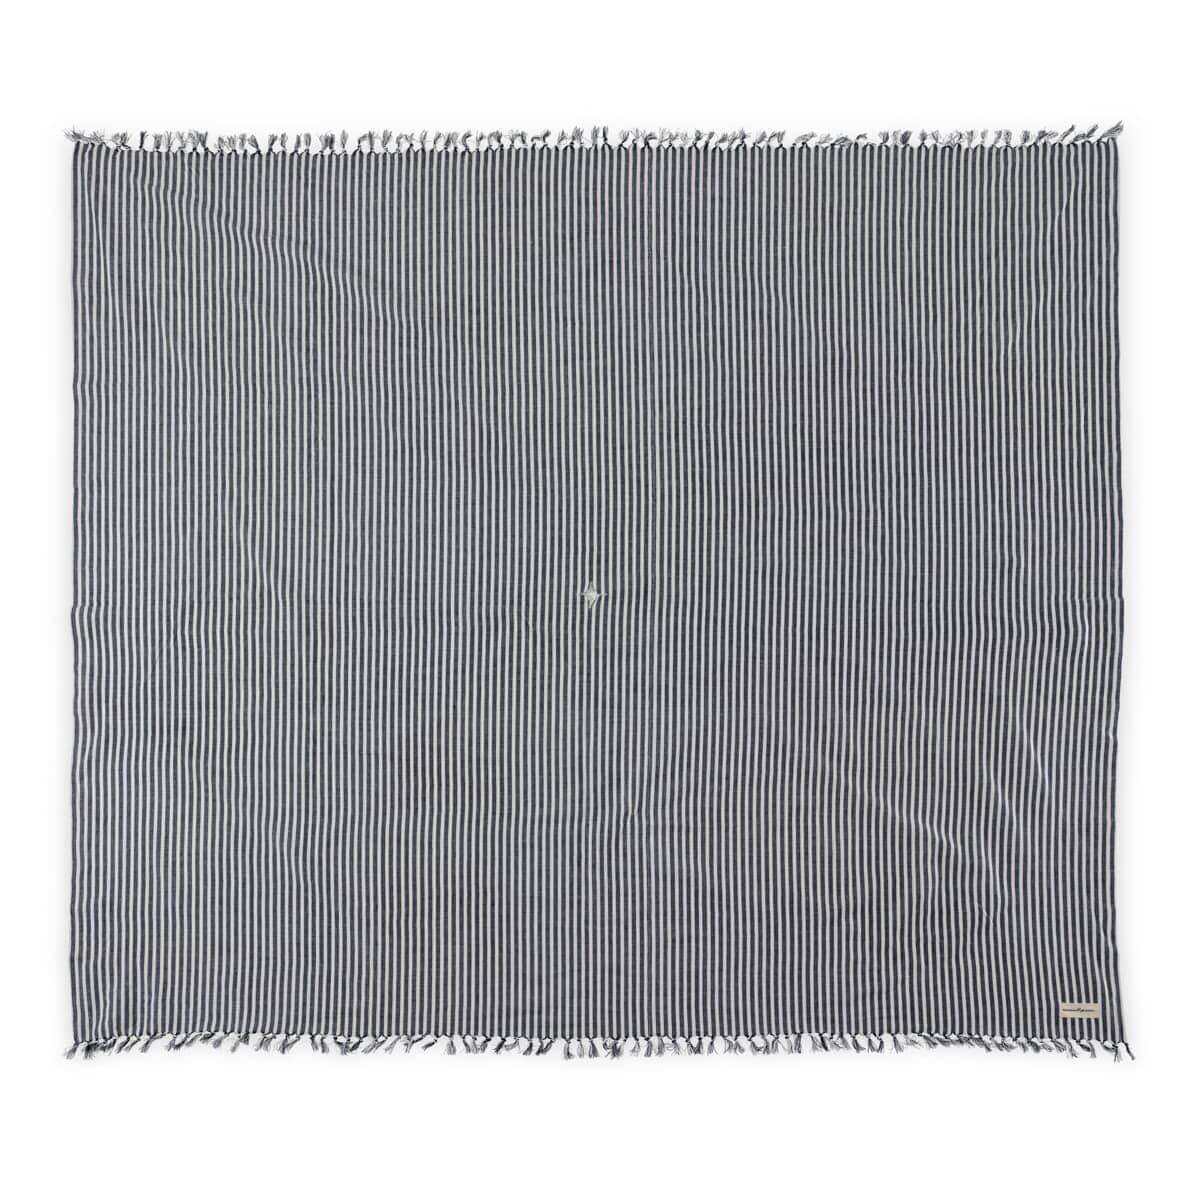 Studio image of navy table cloth